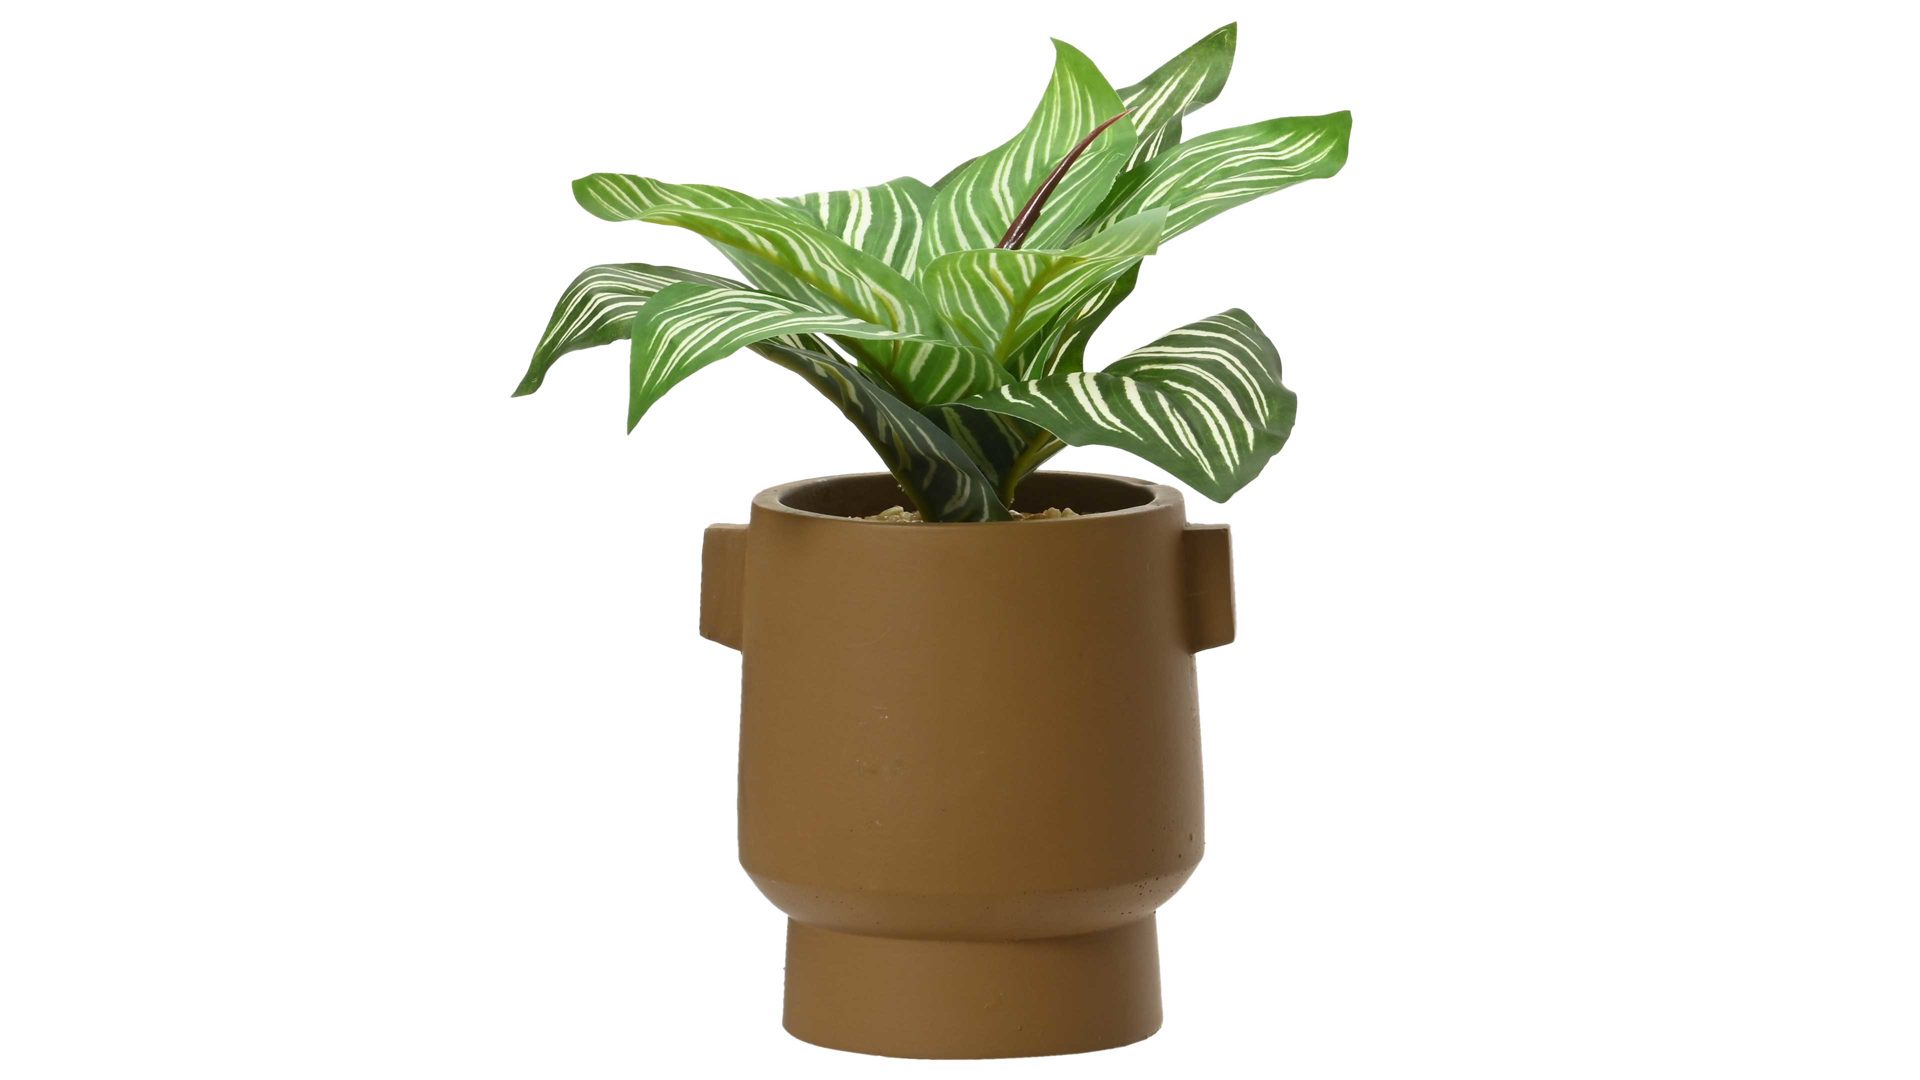 Pflanze Kaemingk aus Kunststoff in Braun Calathea im Topf Kunststoff & terracottafarbener Keramiktopf - Höhe ca. 25 cm